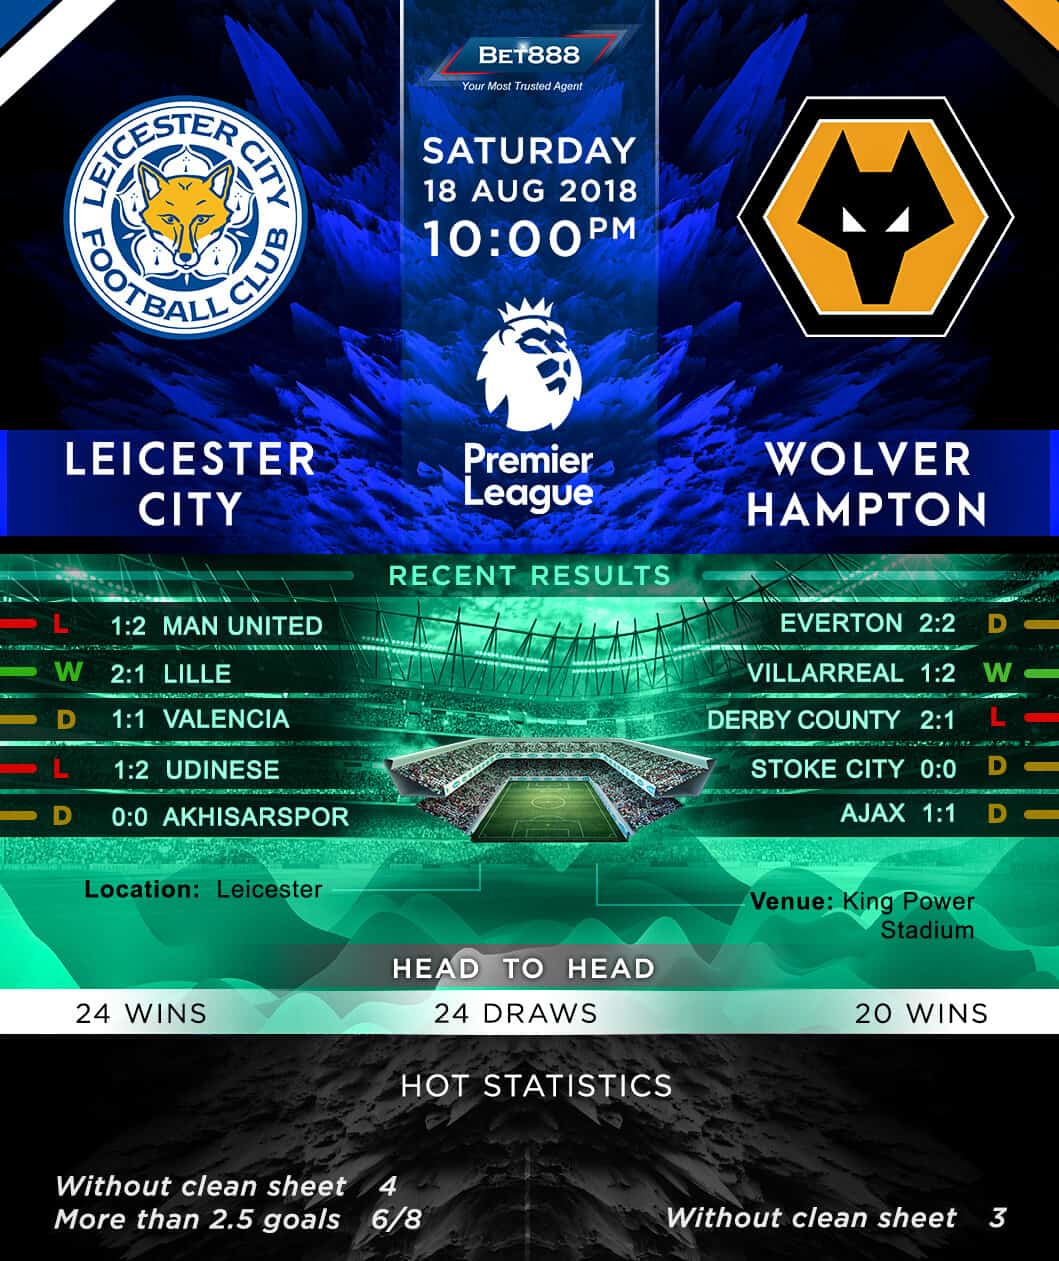 Leicester City vs Wolverhampton Wanderers 18/08/18